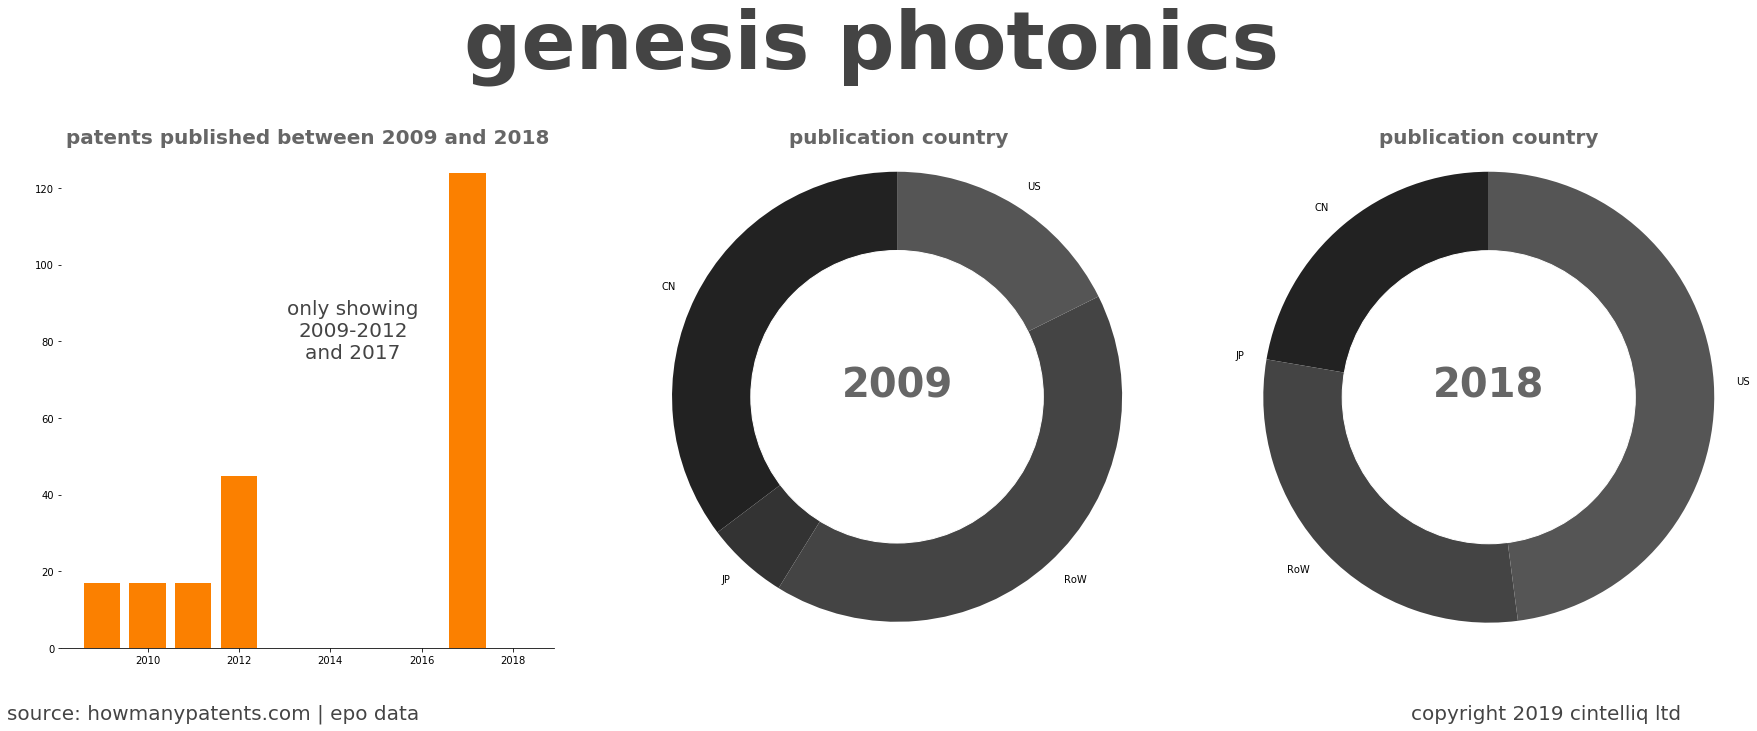 summary of patents for Genesis Photonics